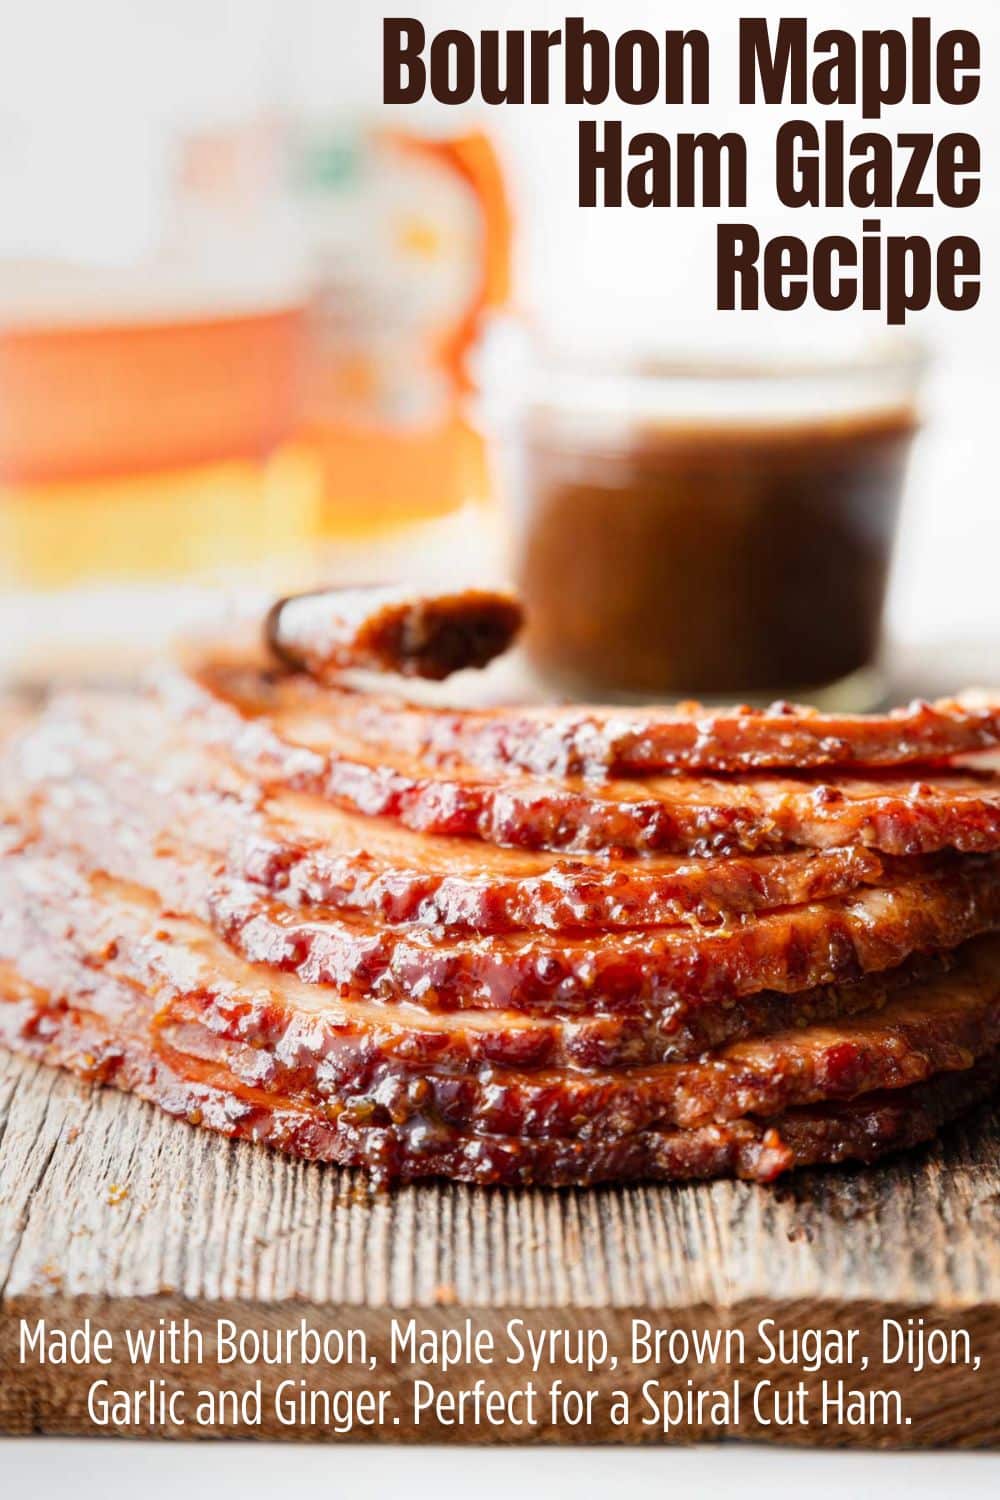 Bourbon Maple Ham Glaze pinterest image with text overlay